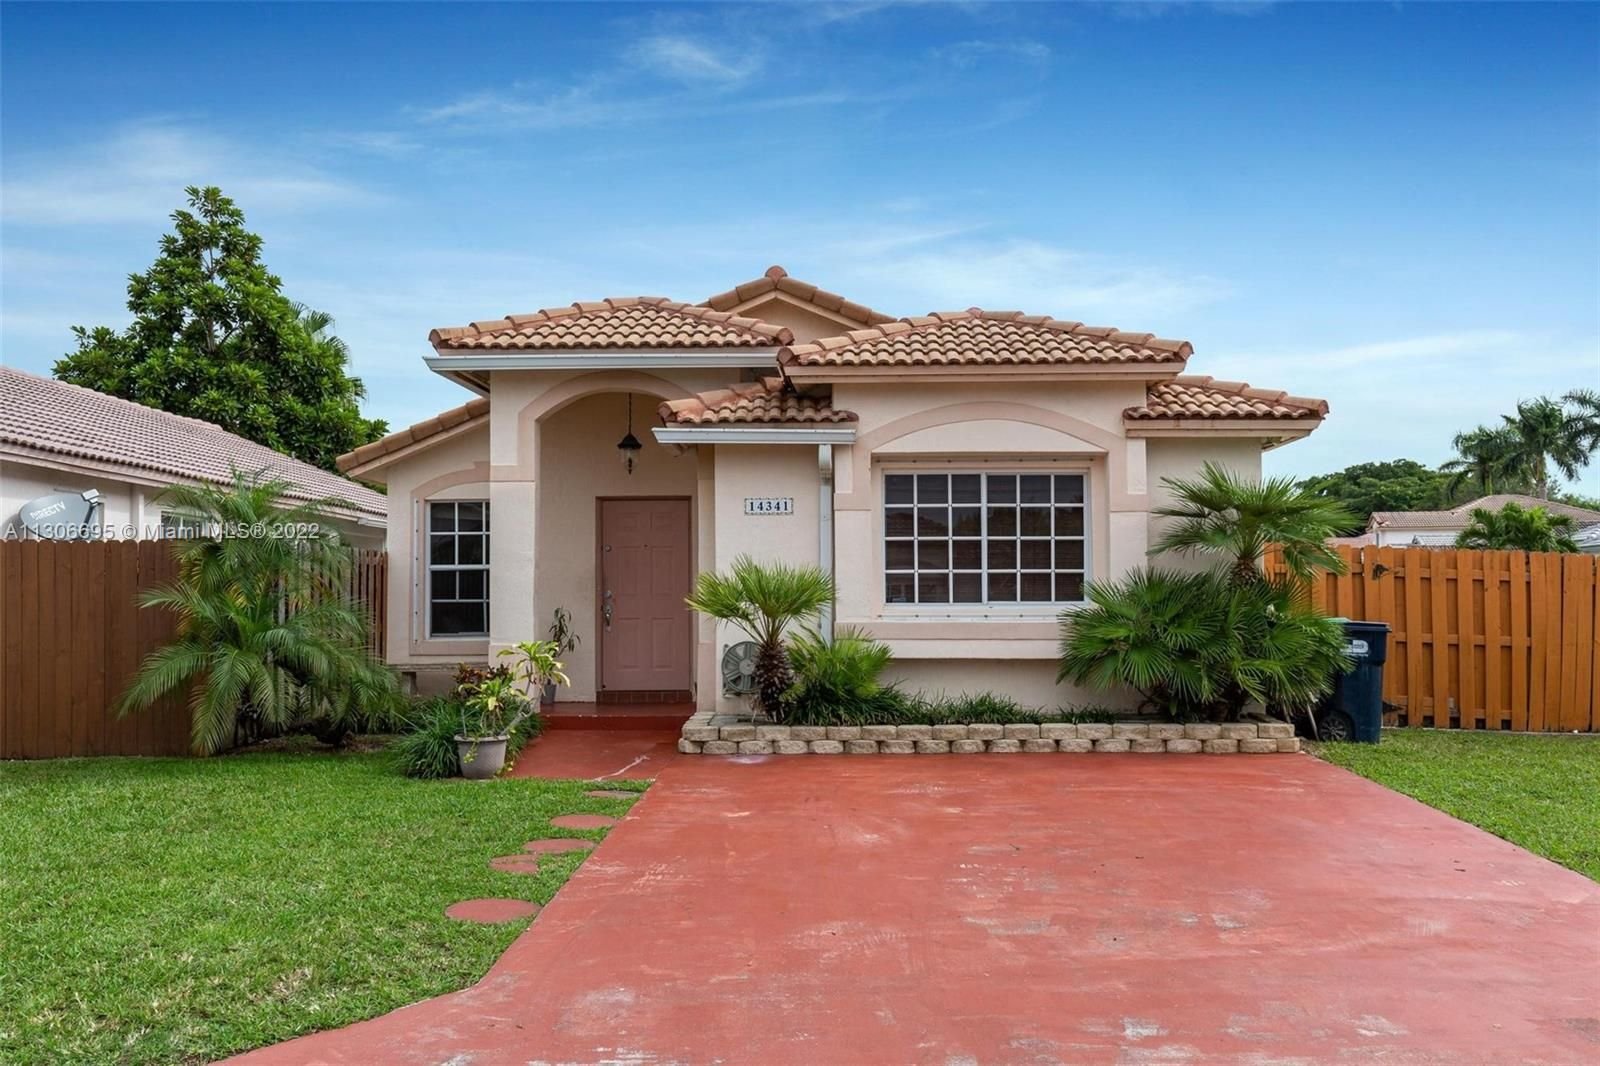 Real estate property located at 14341 151st Ct, Miami-Dade County, Miami, FL